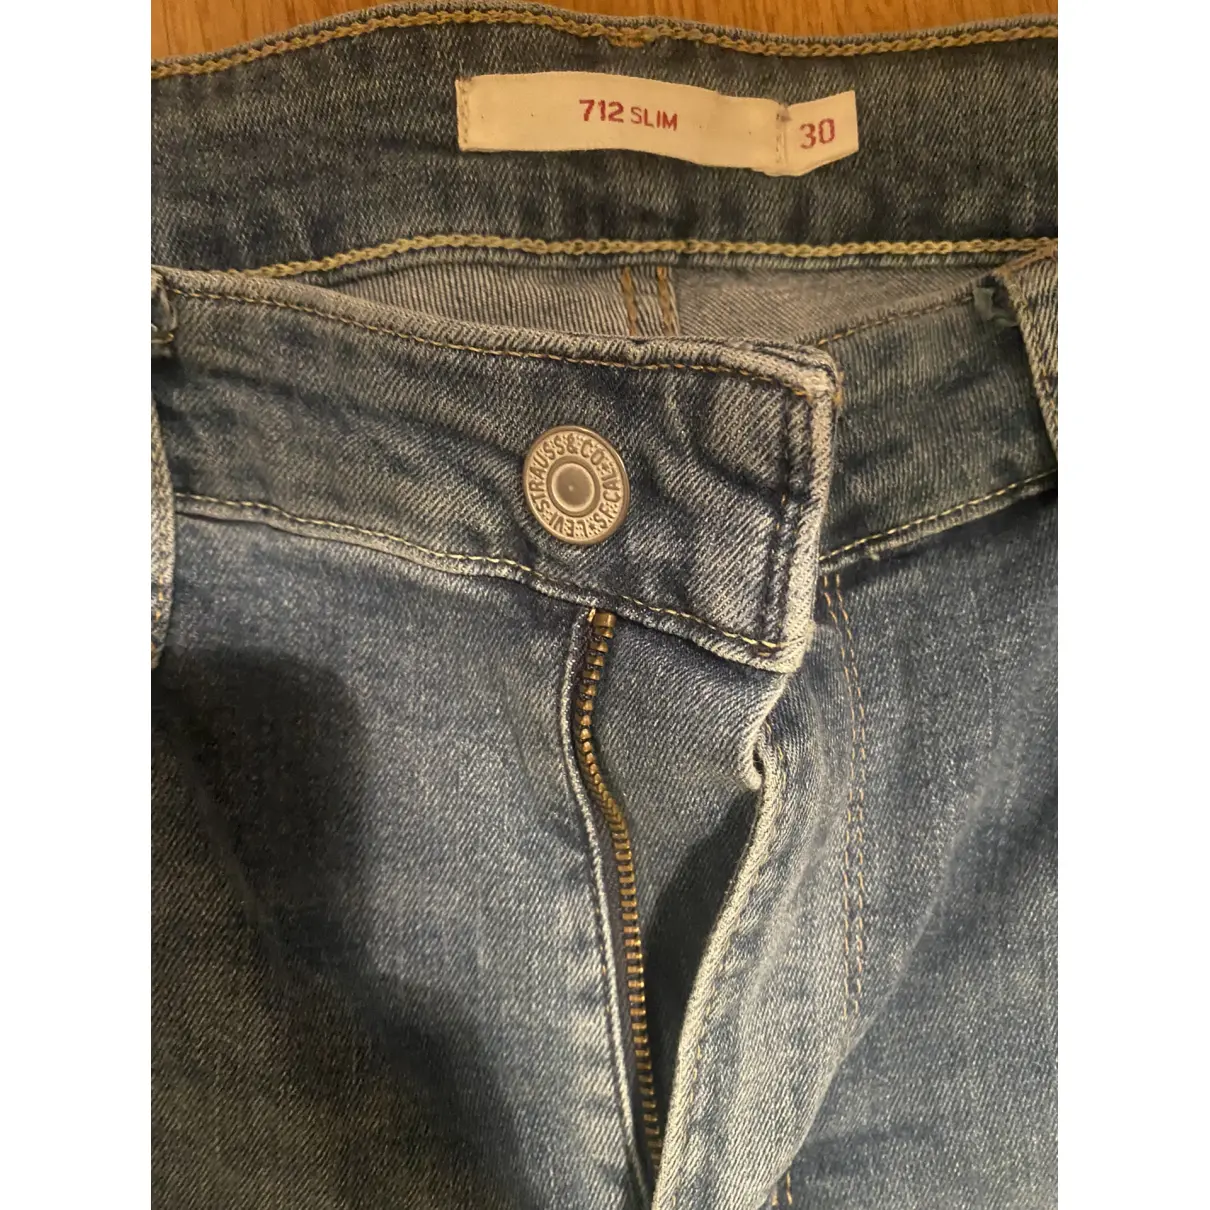 Buy Levi's 712 slim jeans online